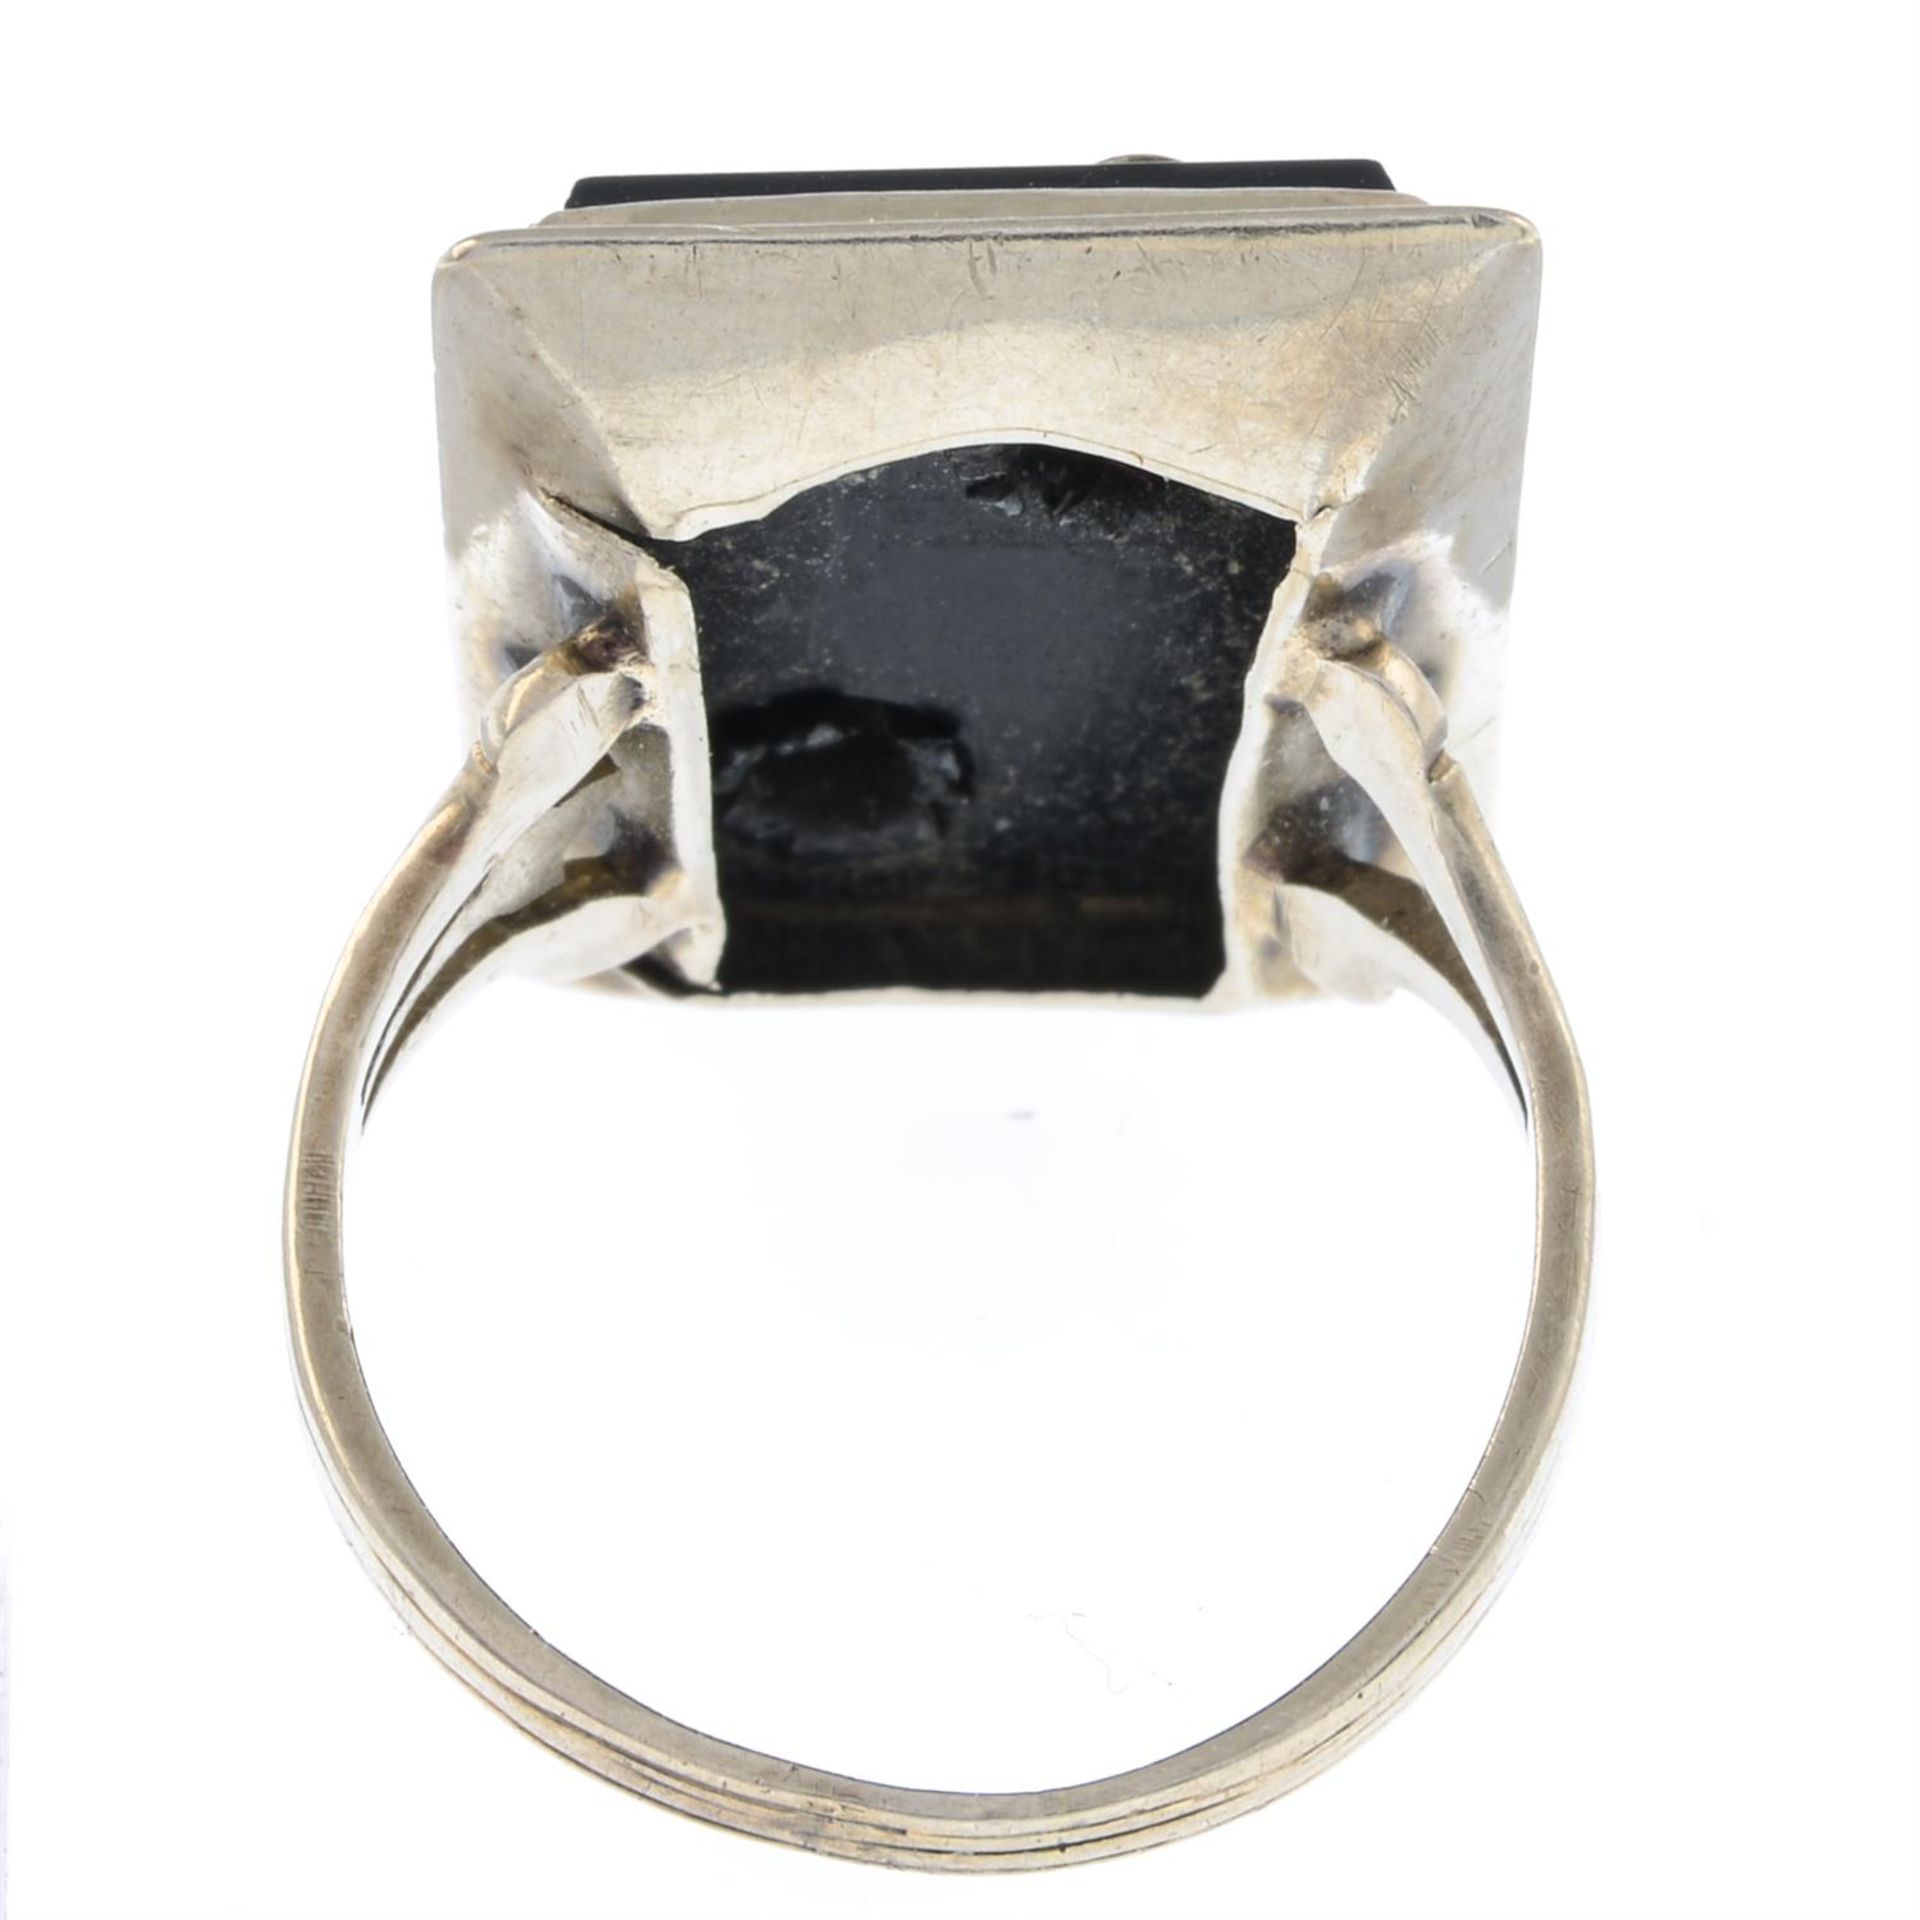 Mid 20th century onyx & diamond ring - Image 2 of 2